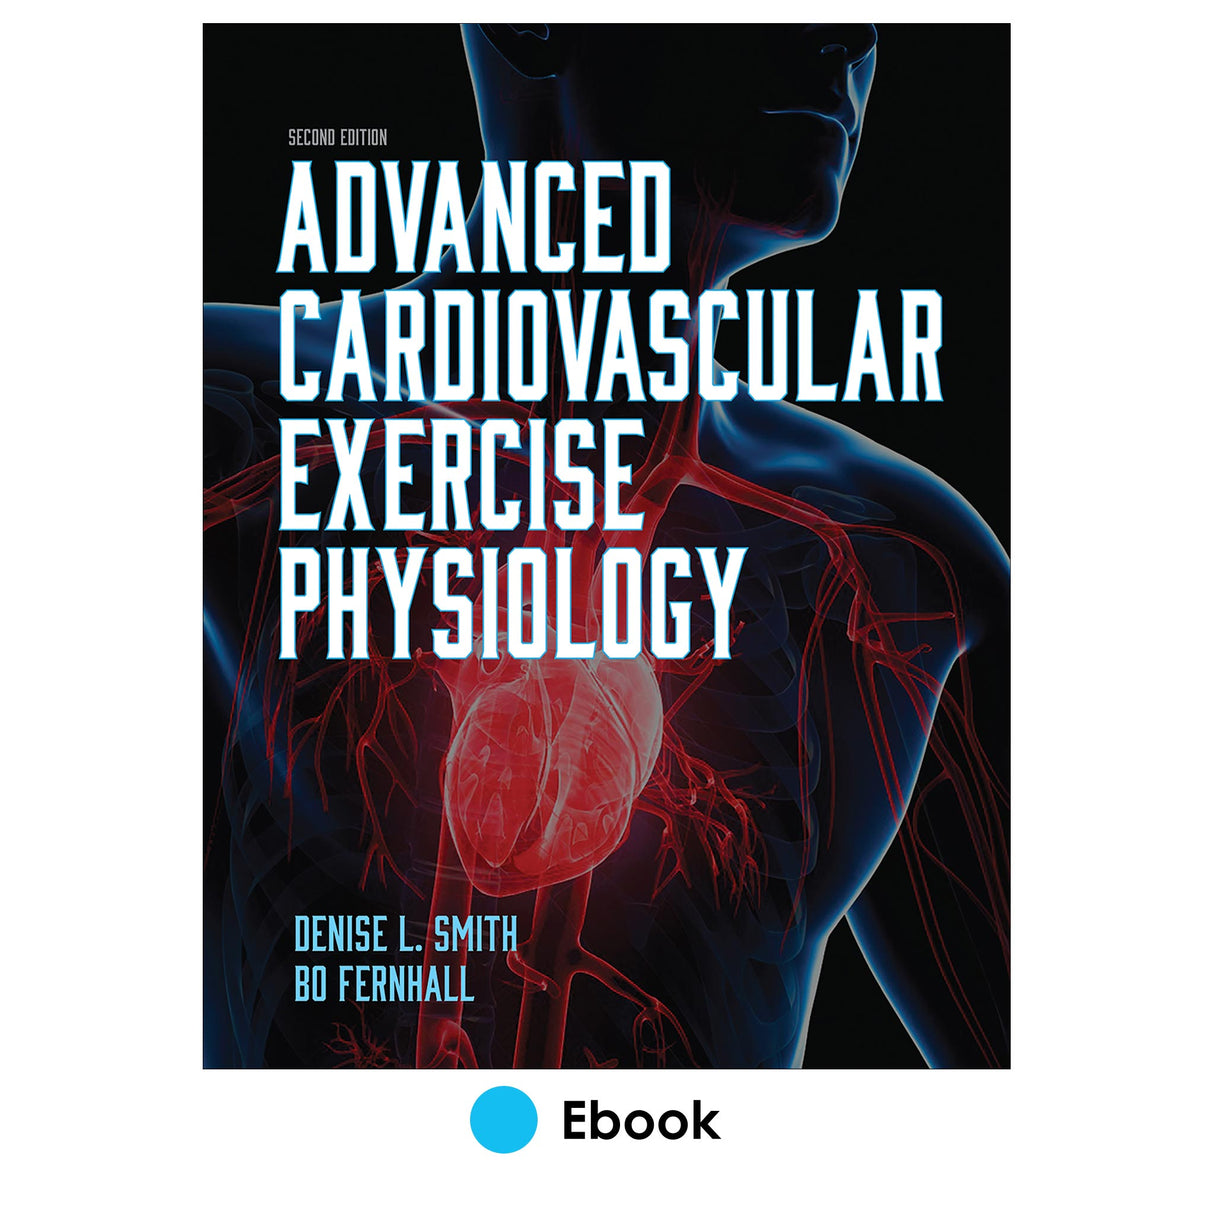 Advanced Cardiovascular Exercise Physiology 2nd Edition epub